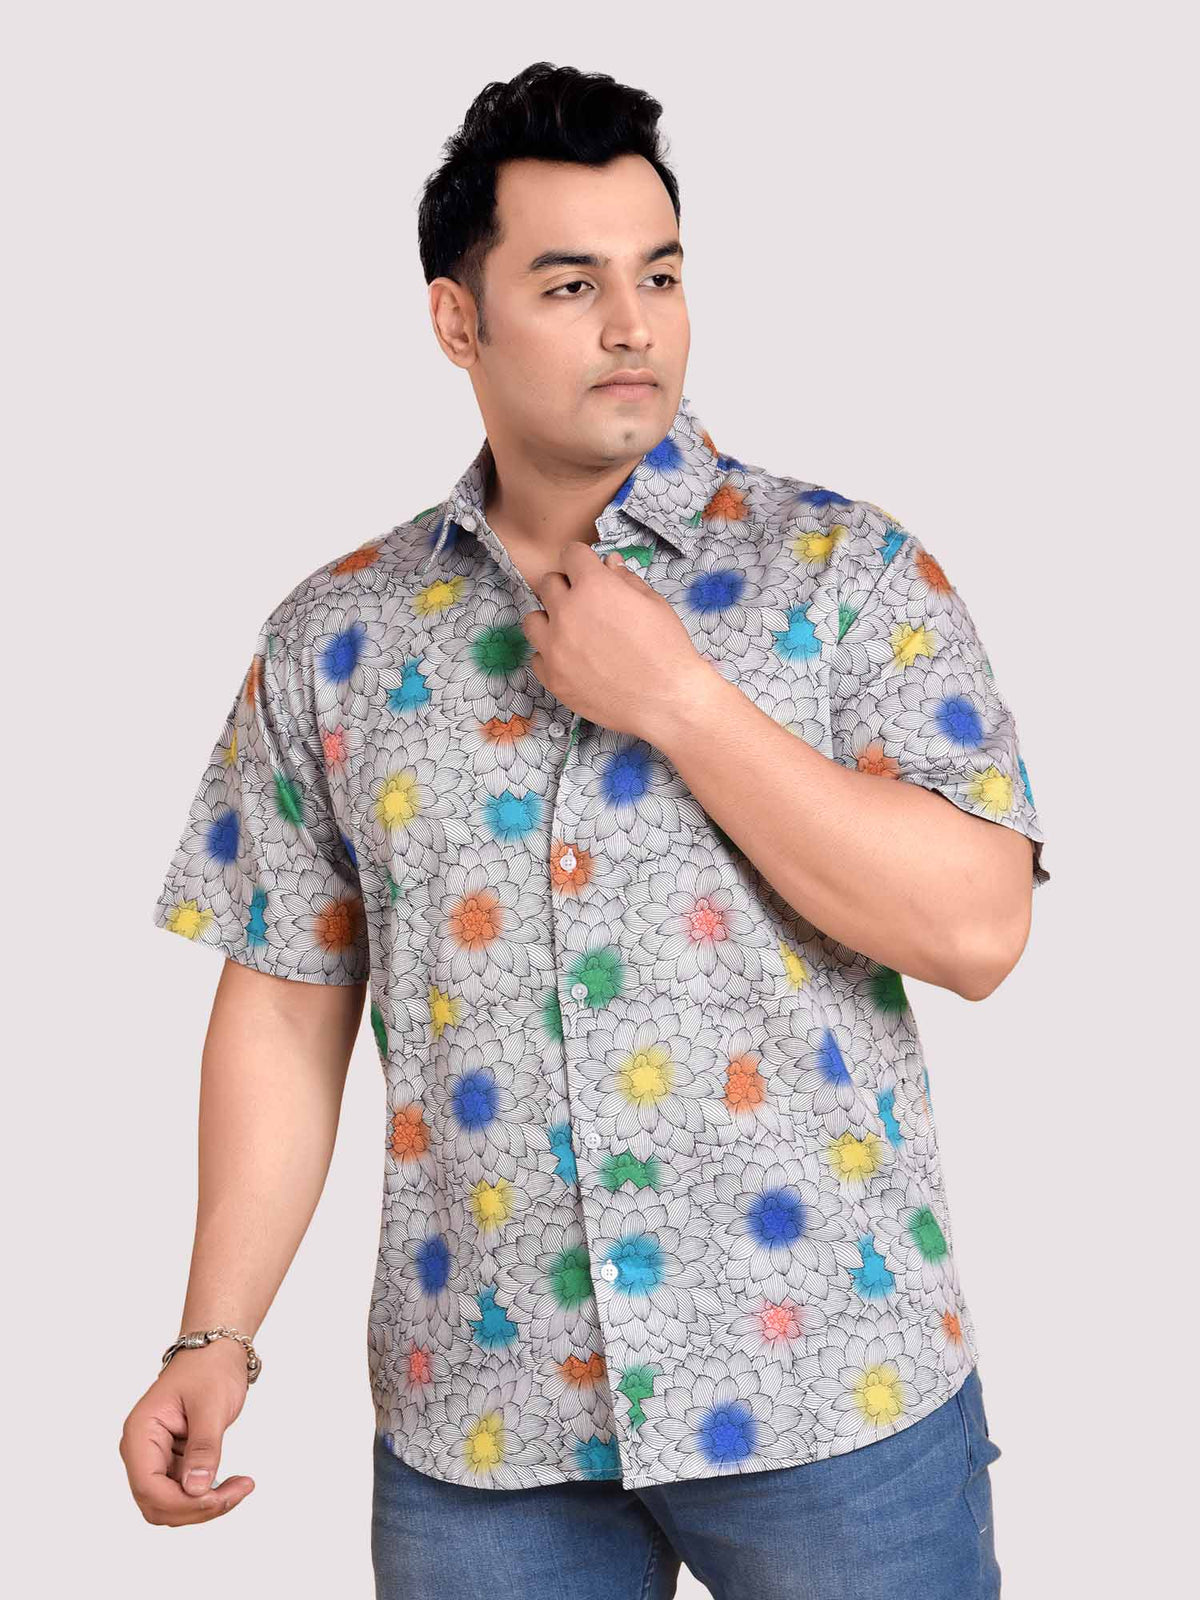 X Eric Haze graphic Digital Printed Shirt Men's Plus Size